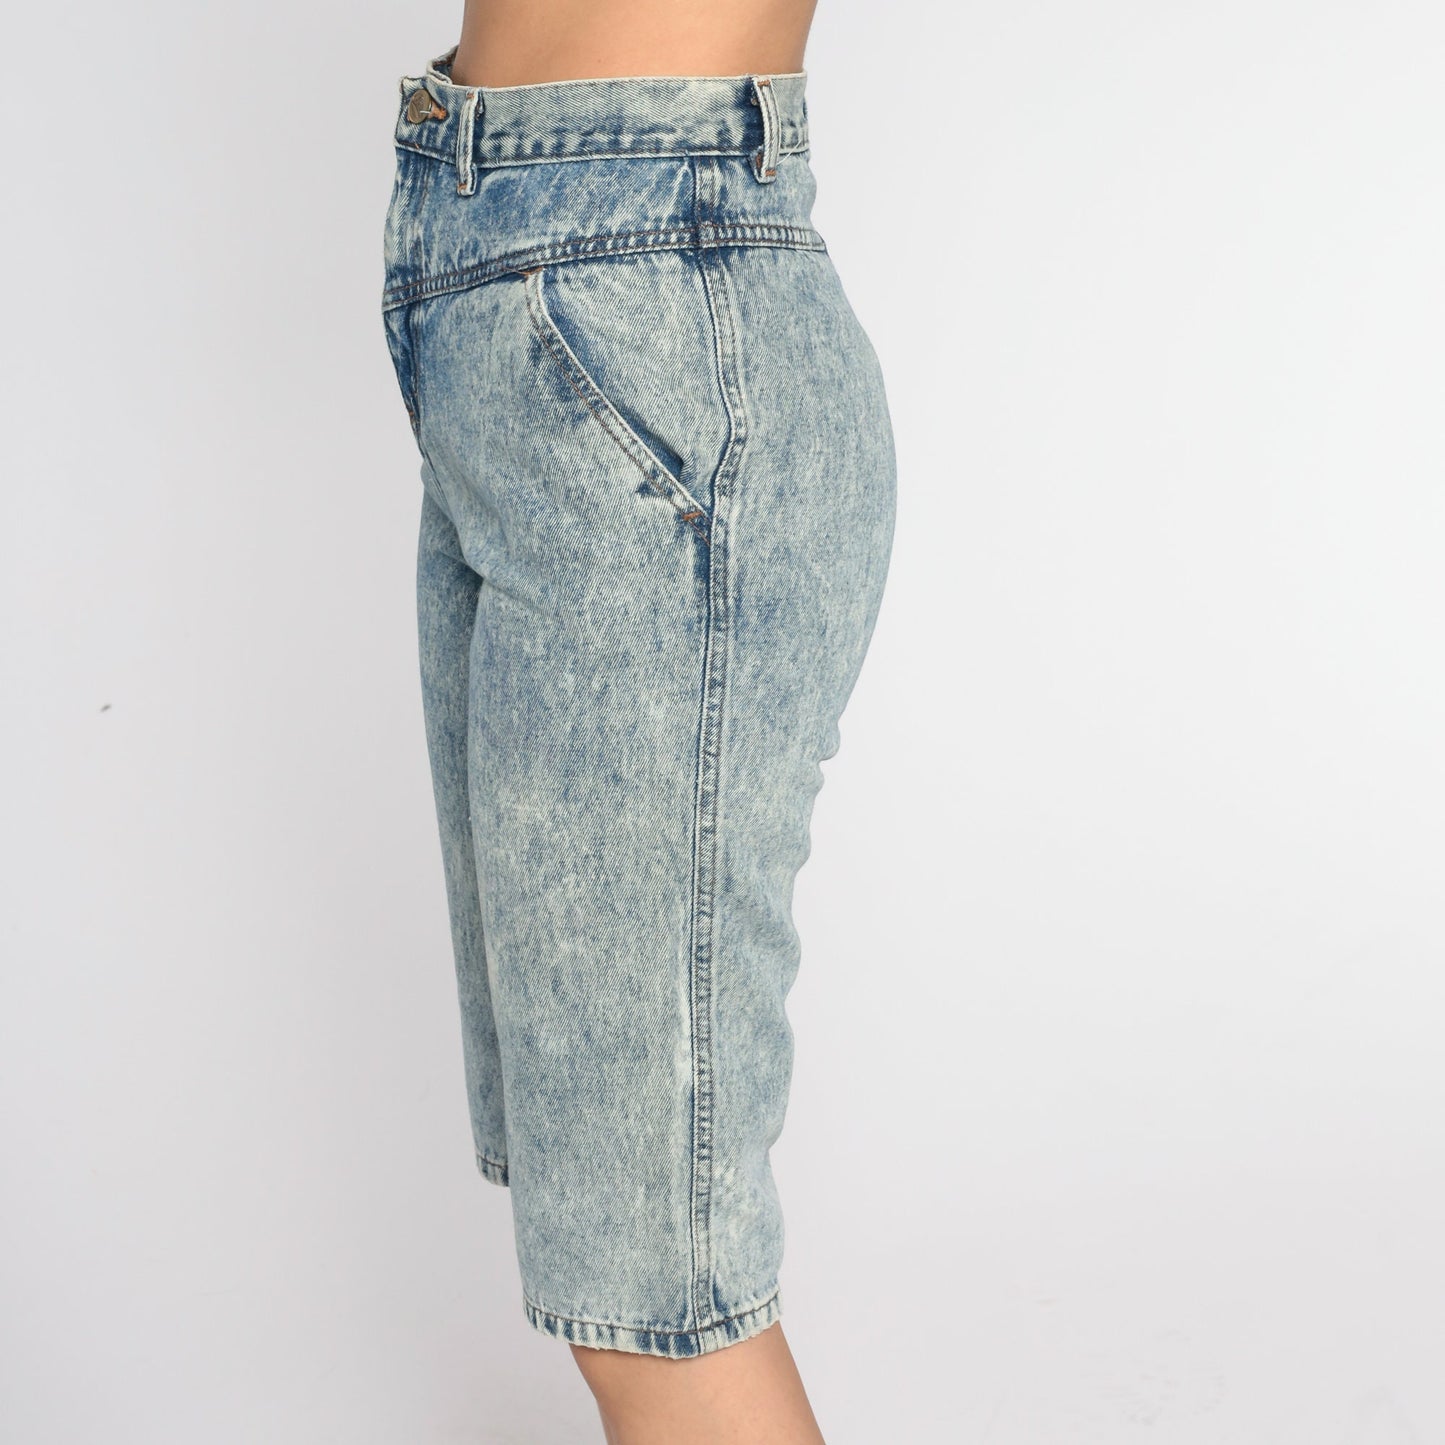 Denim Bermuda Shorts 90s Acid Wash Jean Shorts Retro High Waisted Knee Length Shorts Grunge Festival Streetwear 1990s Vintage Extra Small xs